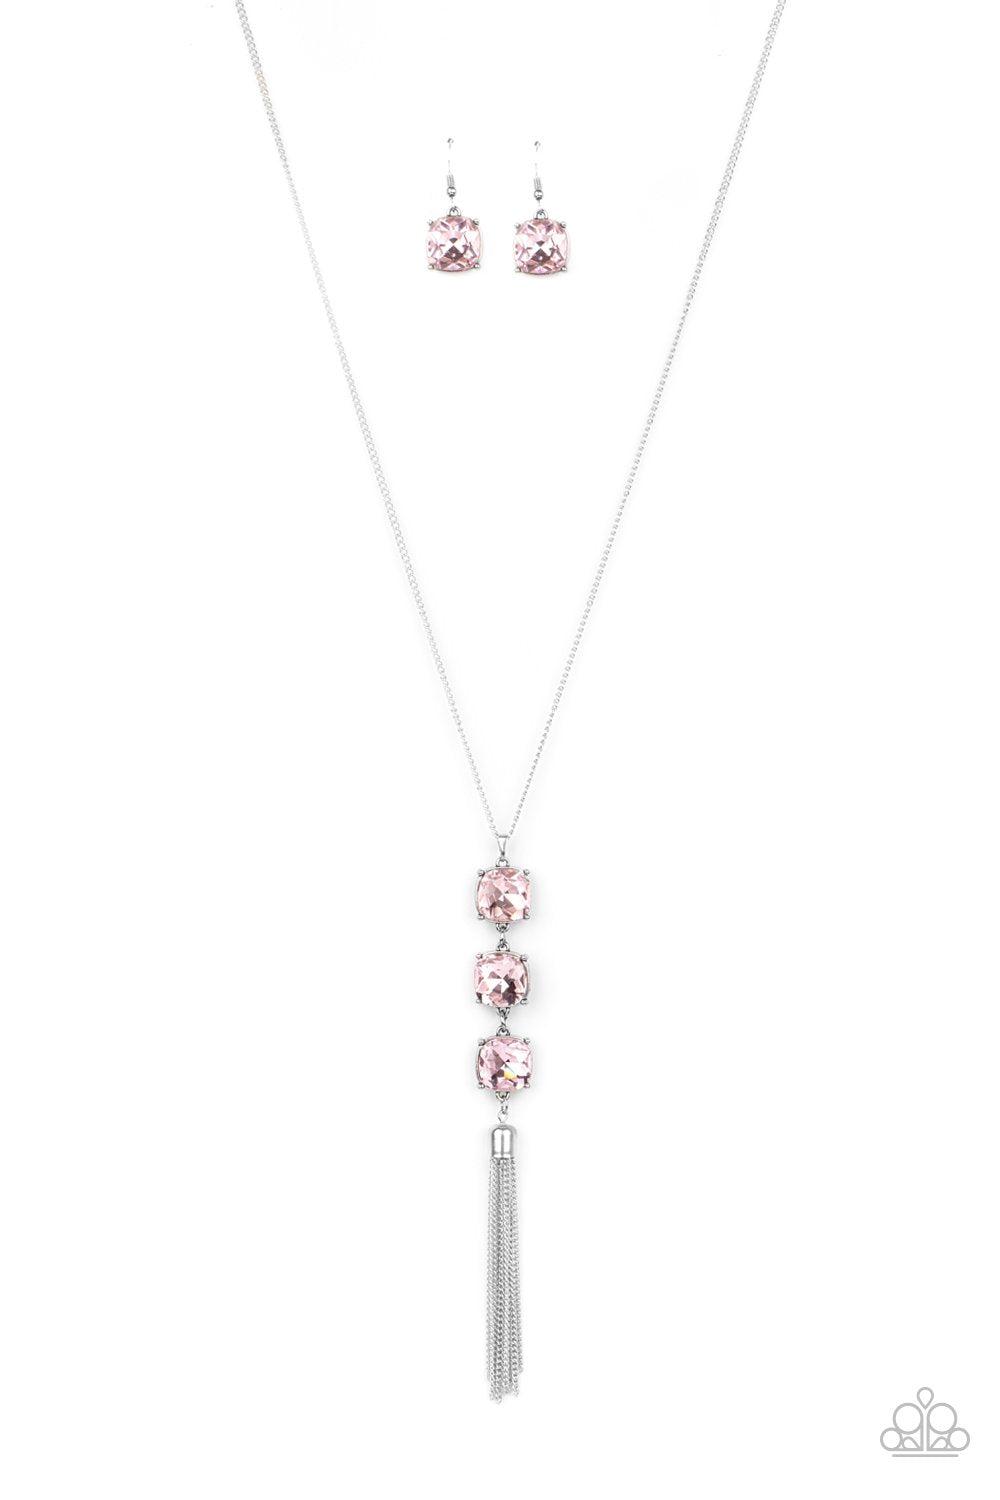 GLOW Me The Money! Pink Rhinestone Tassel Necklace - Paparazzi Accessories- lightbox - CarasShop.com - $5 Jewelry by Cara Jewels